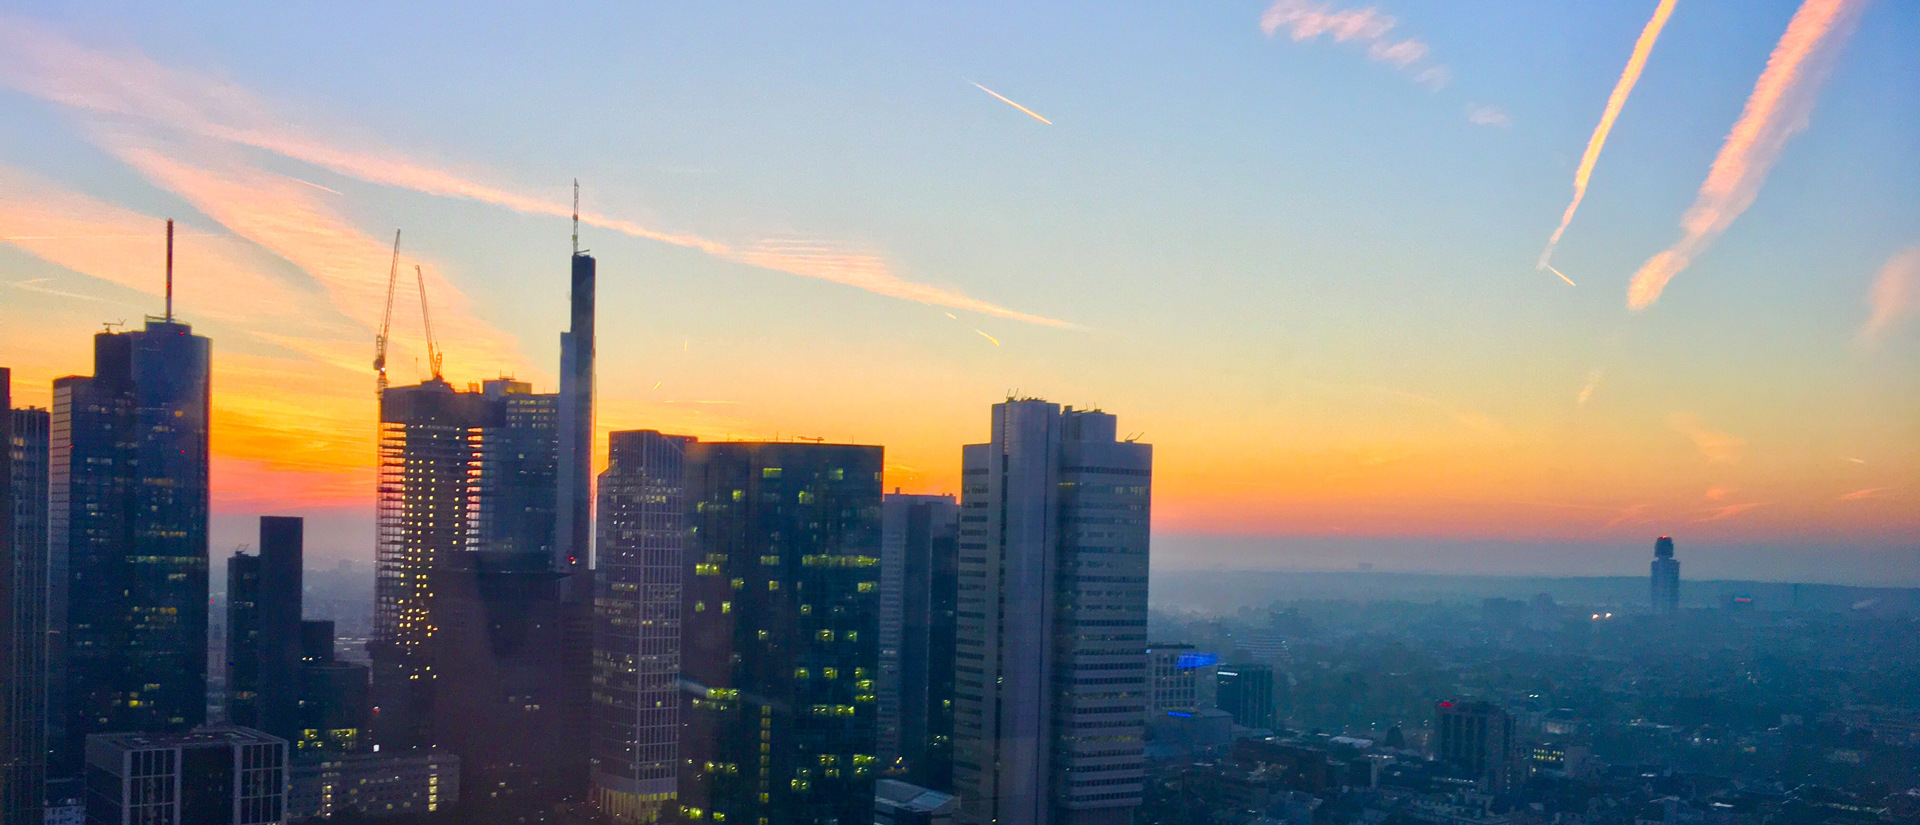 Frankfurt construction work skyline at sunset